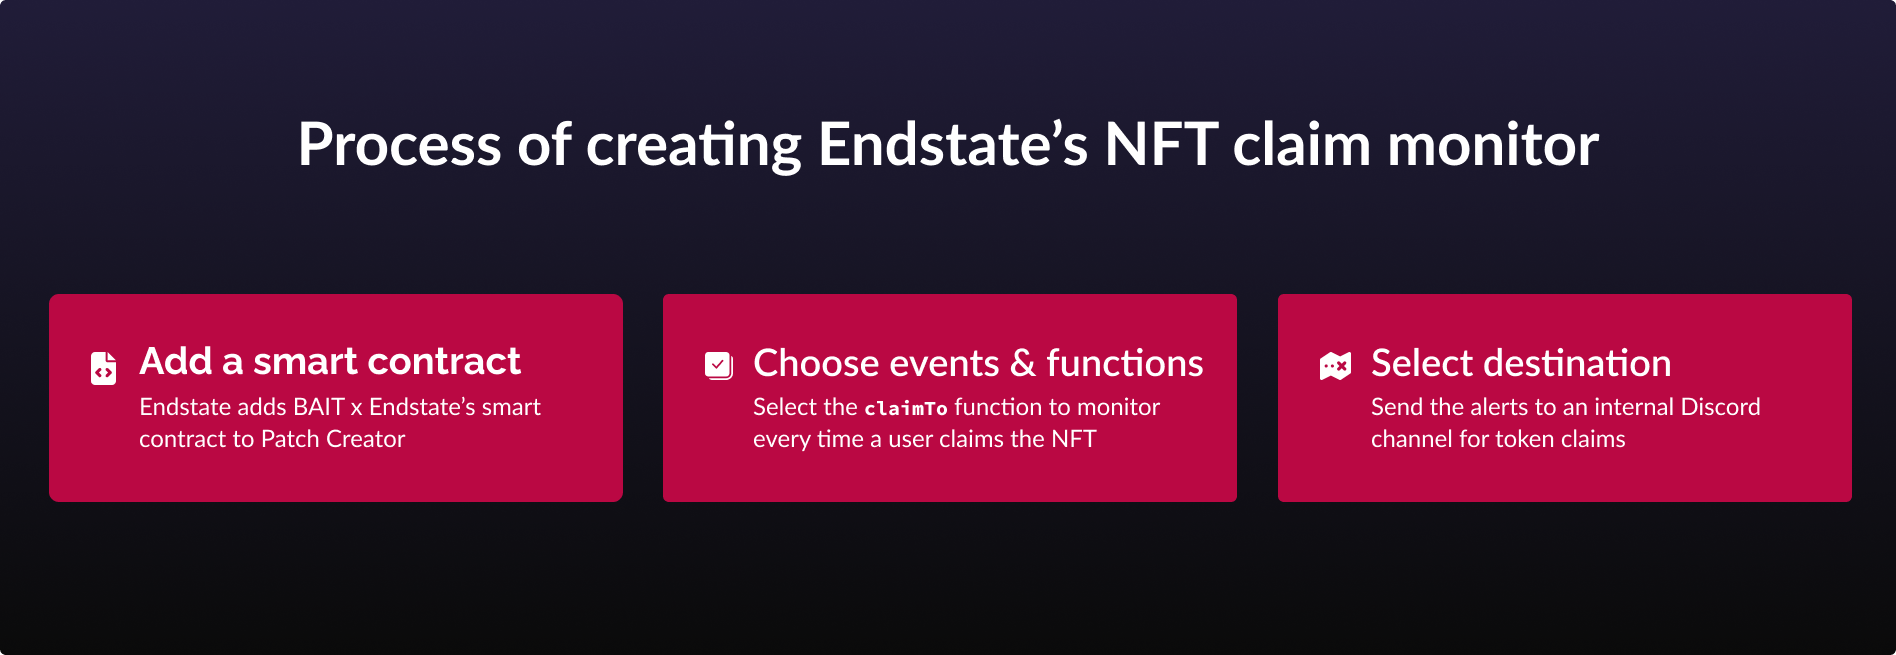 Endstate NFT claim monitor